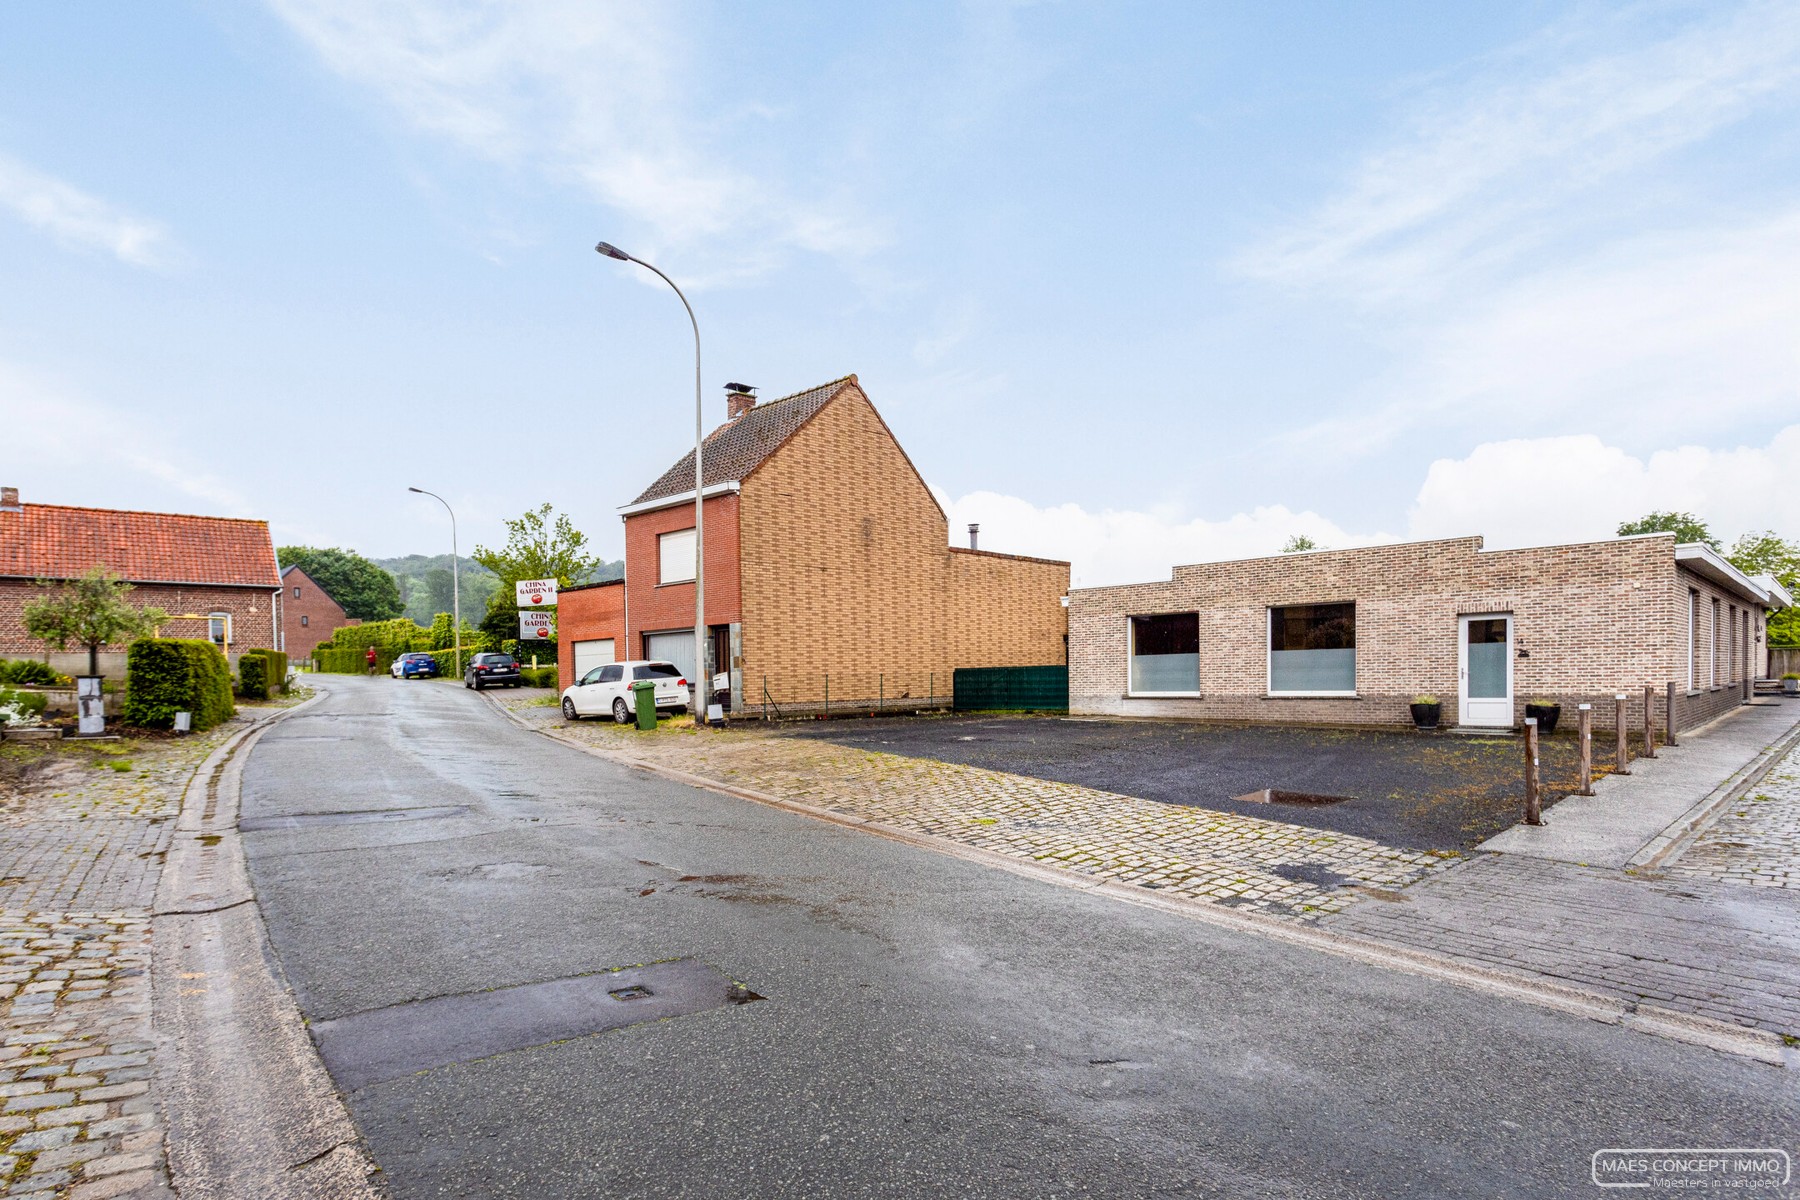 Handelspand met aanpalende woning in Kluisbergen foto 2